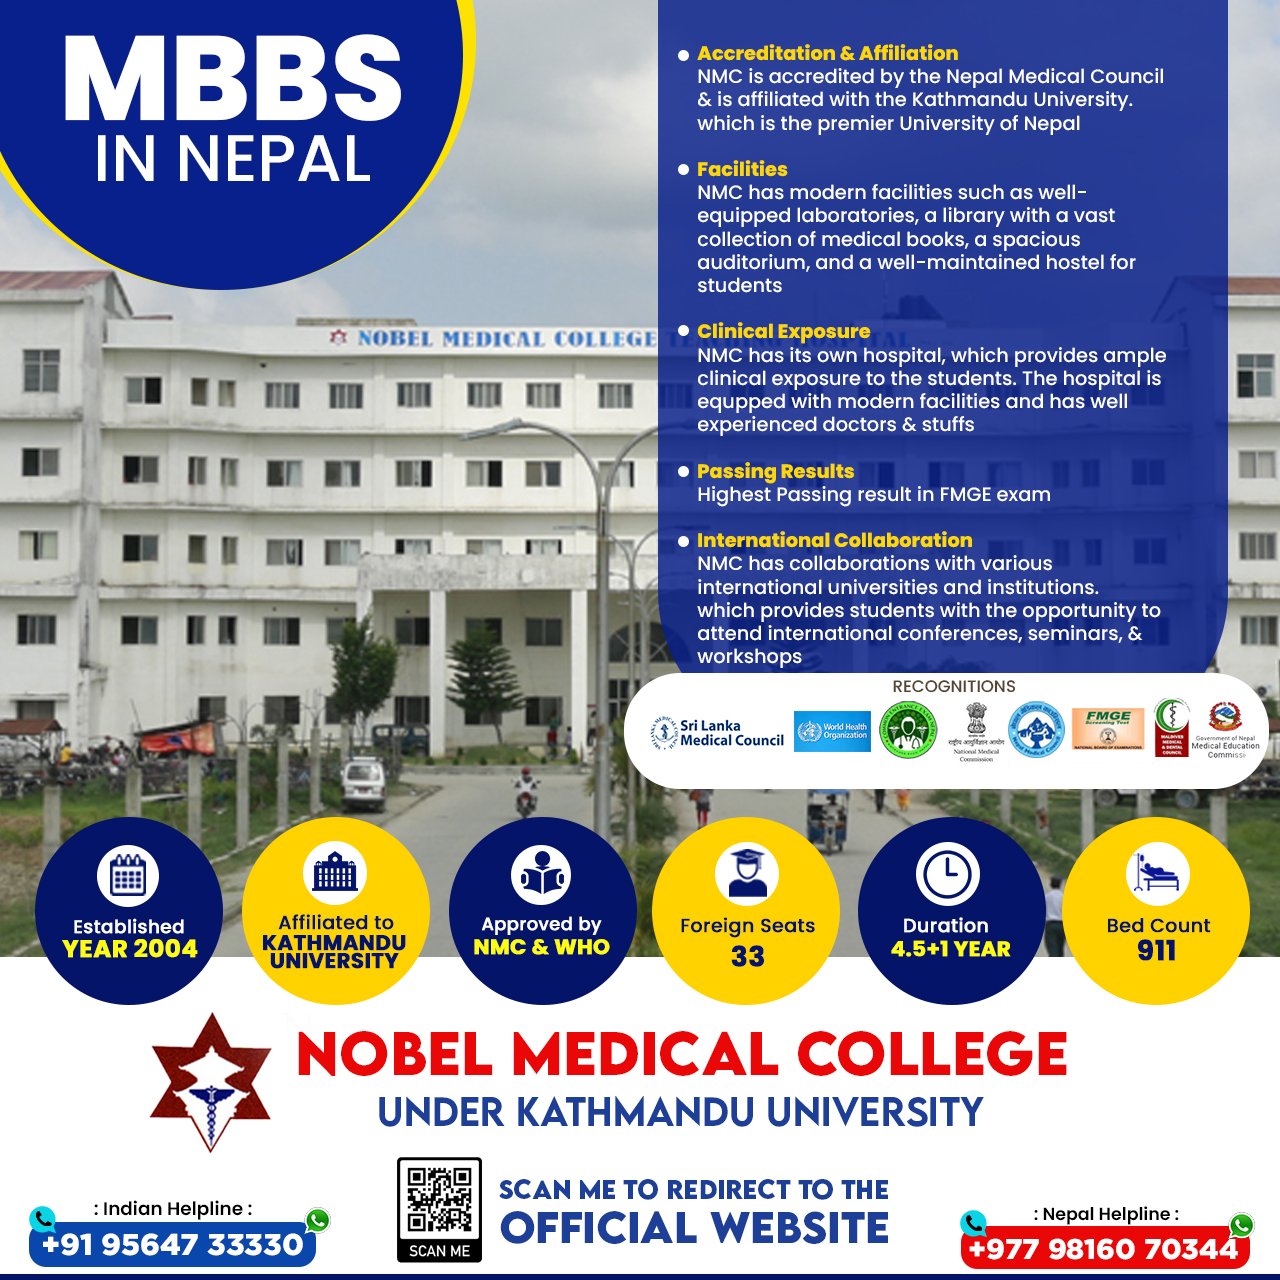 mbbs-in-nepal-at-nobel-medical-college-under-kathmandu-university